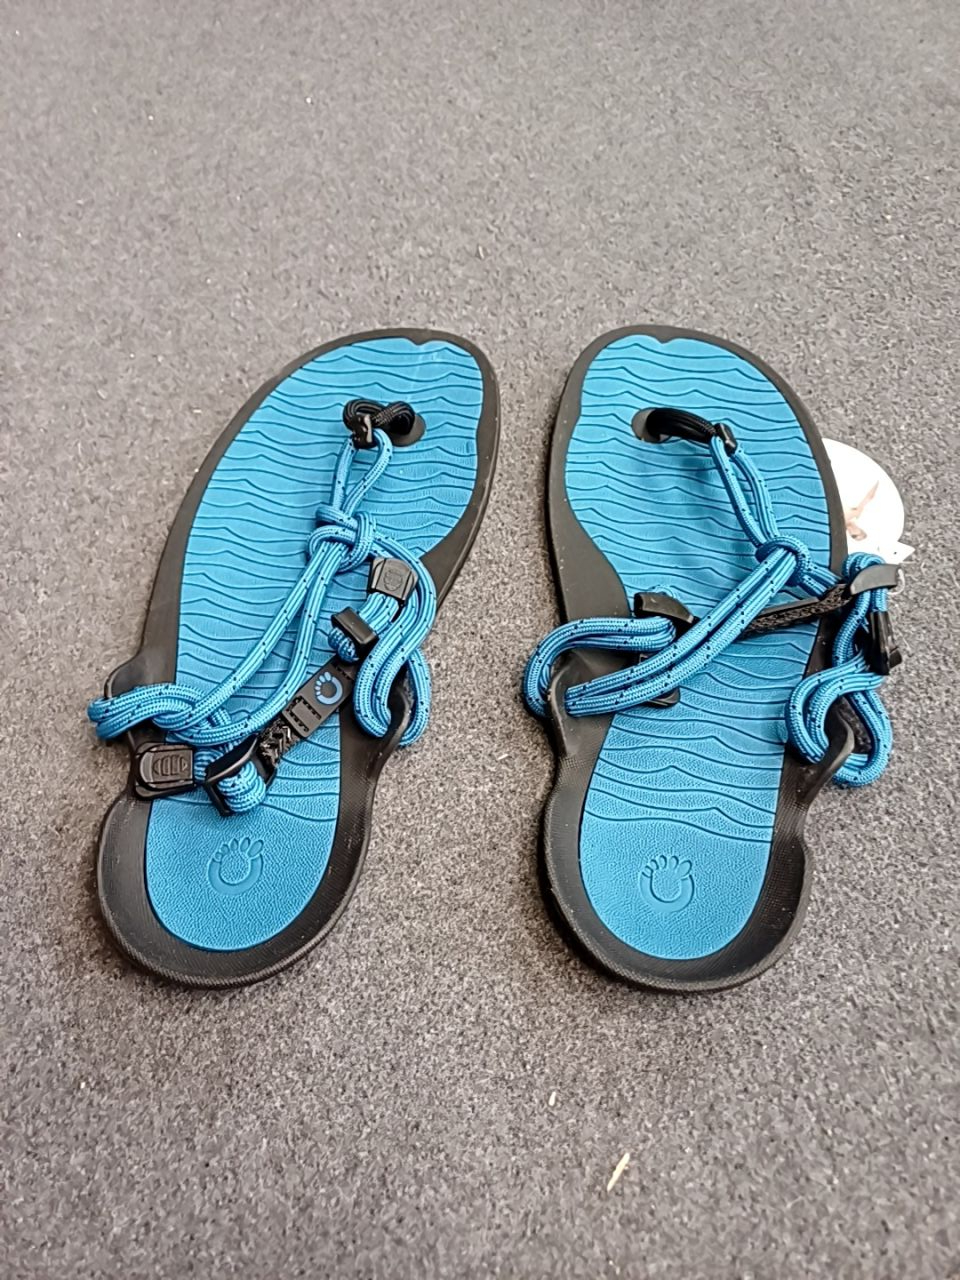 Pánské barefoot sandály - blue sapphire Xero Shoes velikost 41